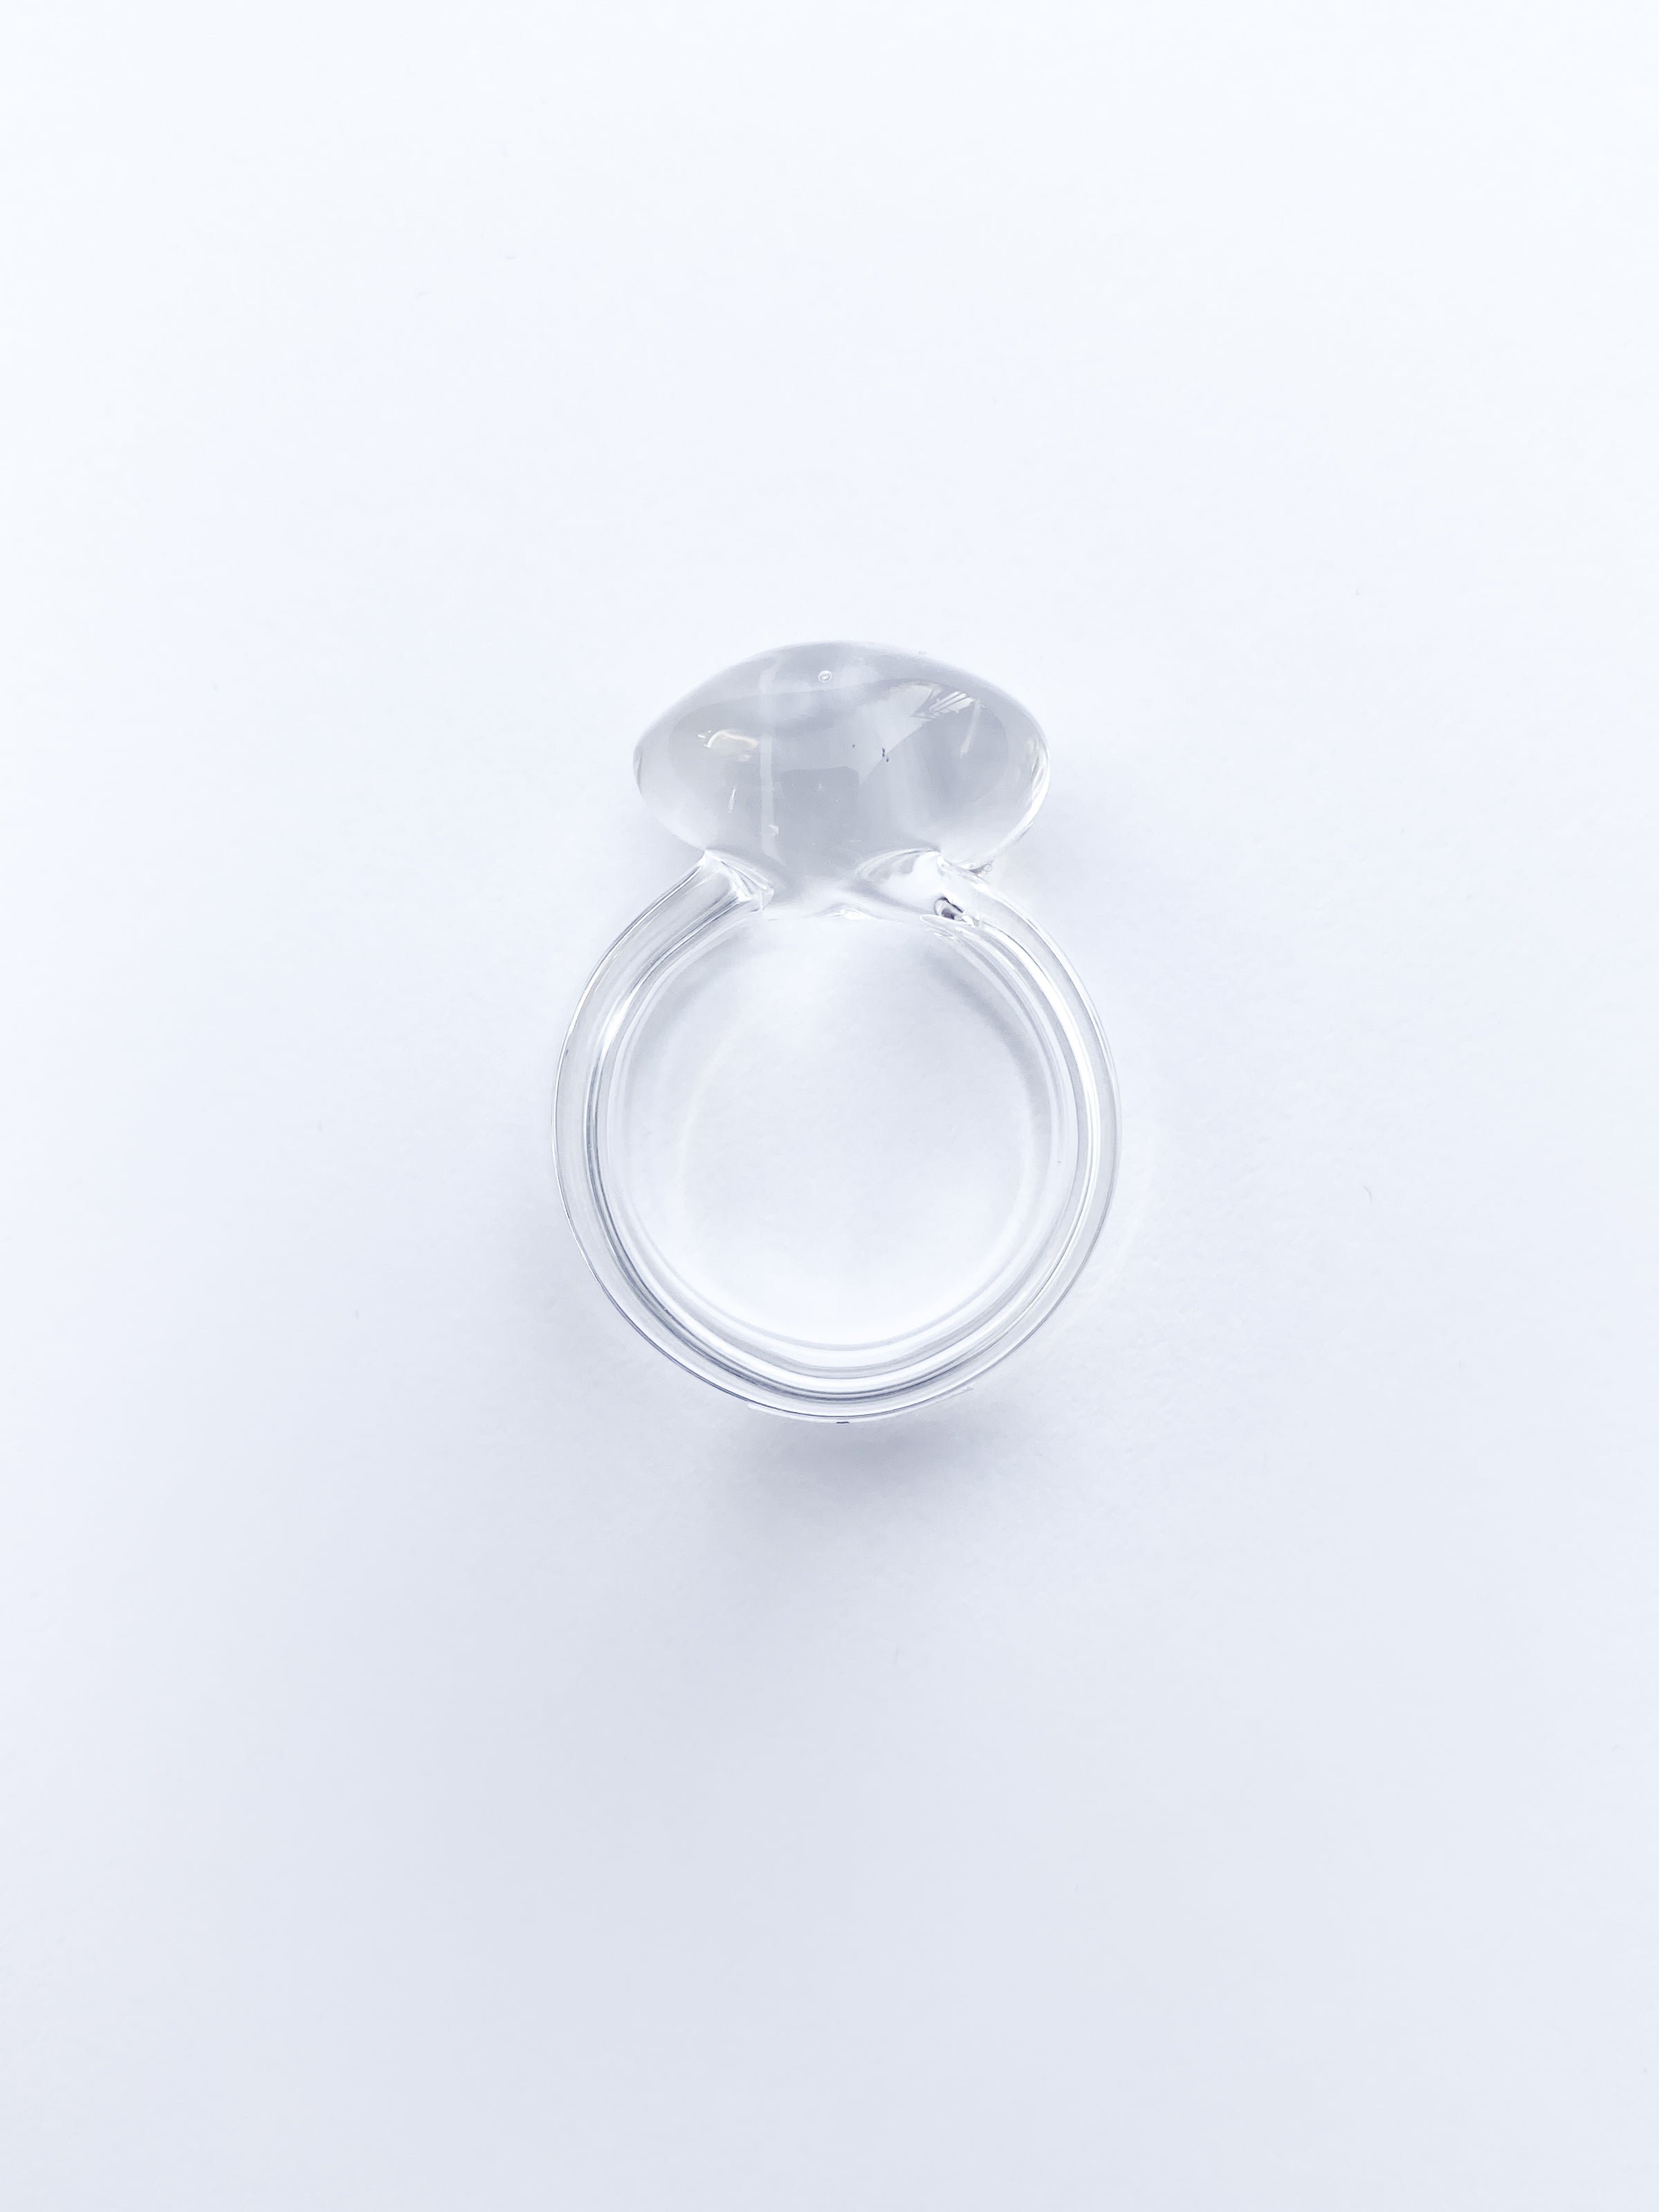 Glass sphere ring